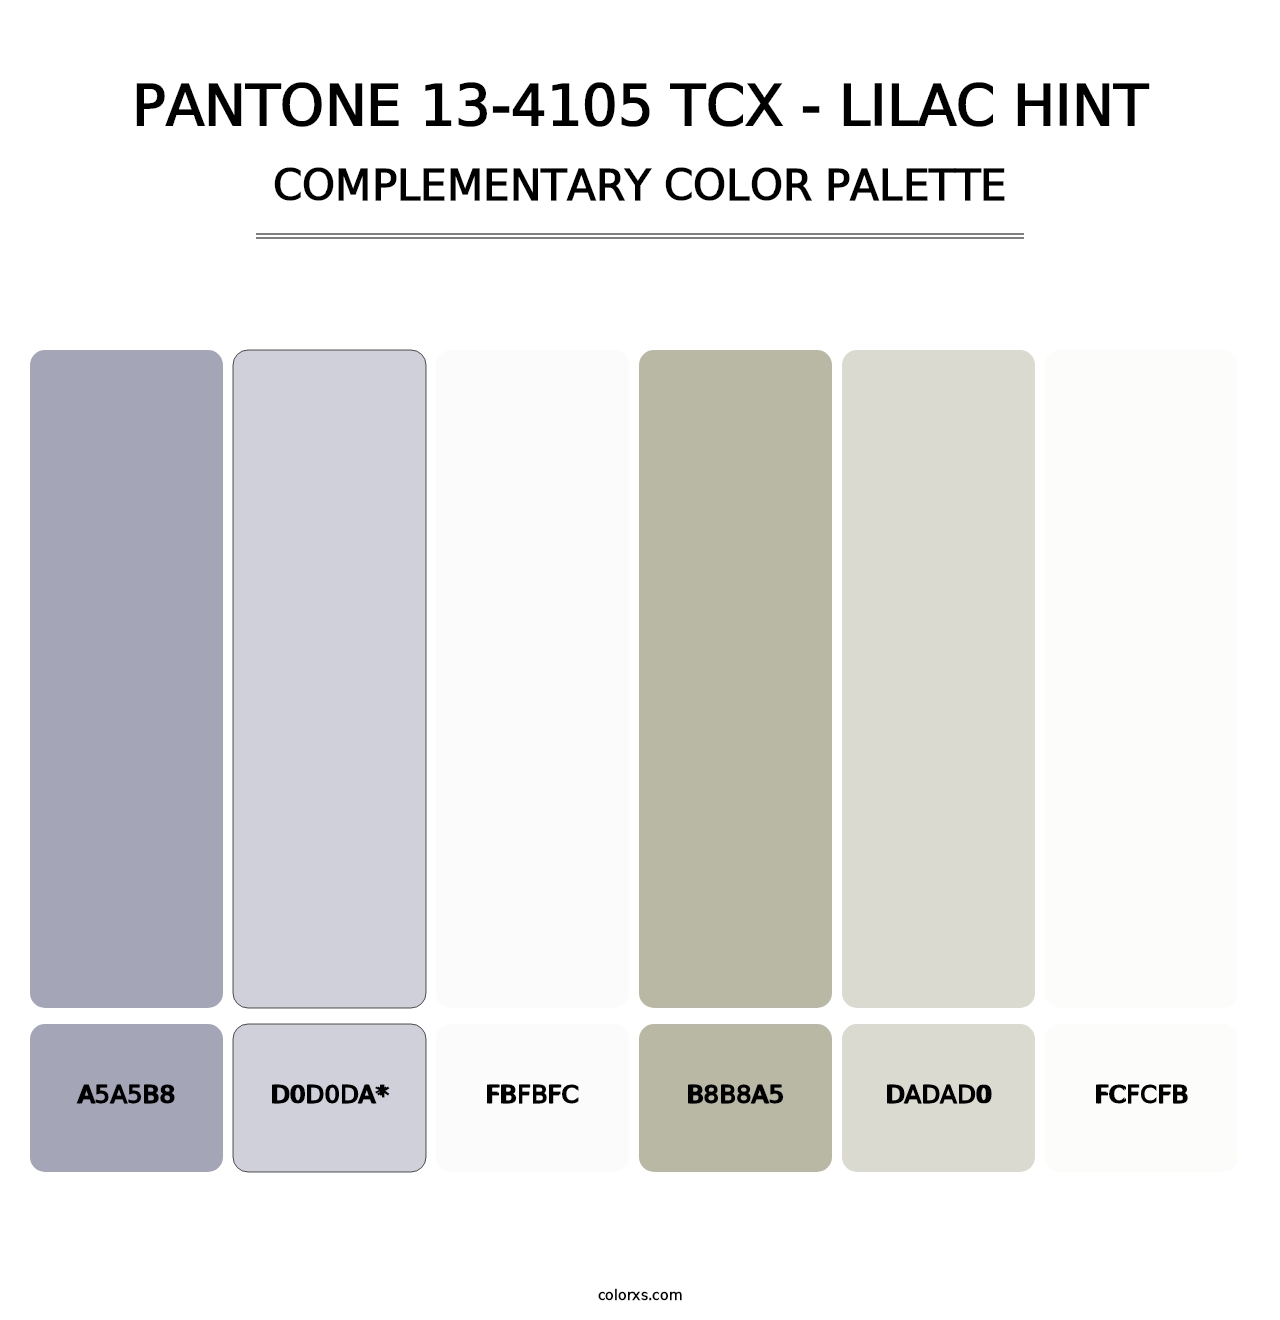 PANTONE 13-4105 TCX - Lilac Hint - Complementary Color Palette